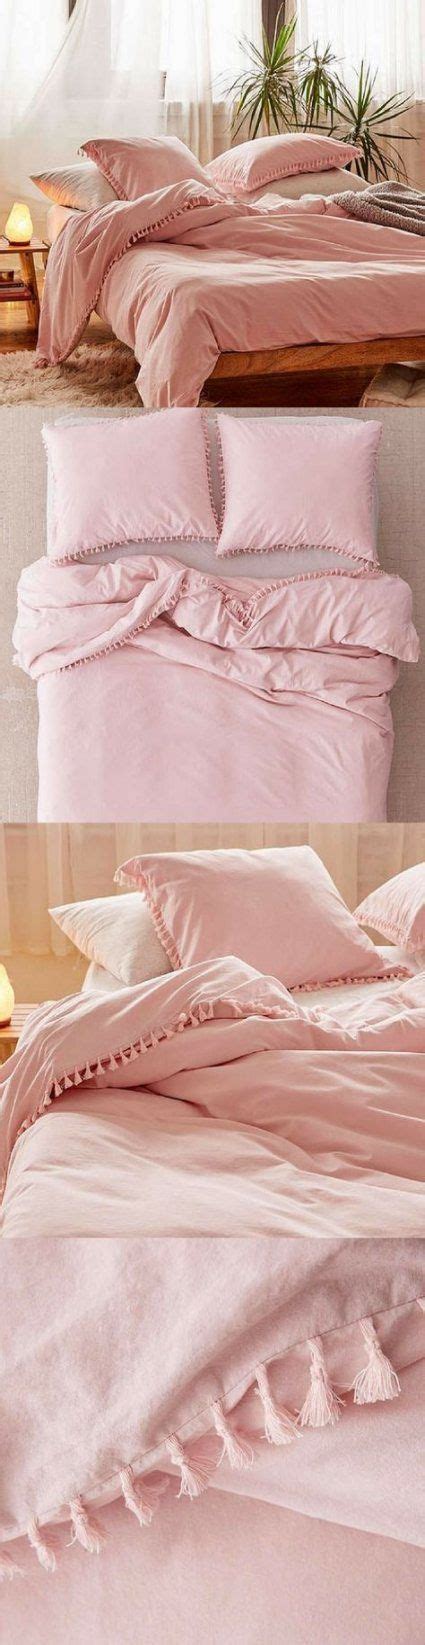 Bedroom Interior Pink Duvet Covers 53 Ideas Pink Duvet Cover Vintage